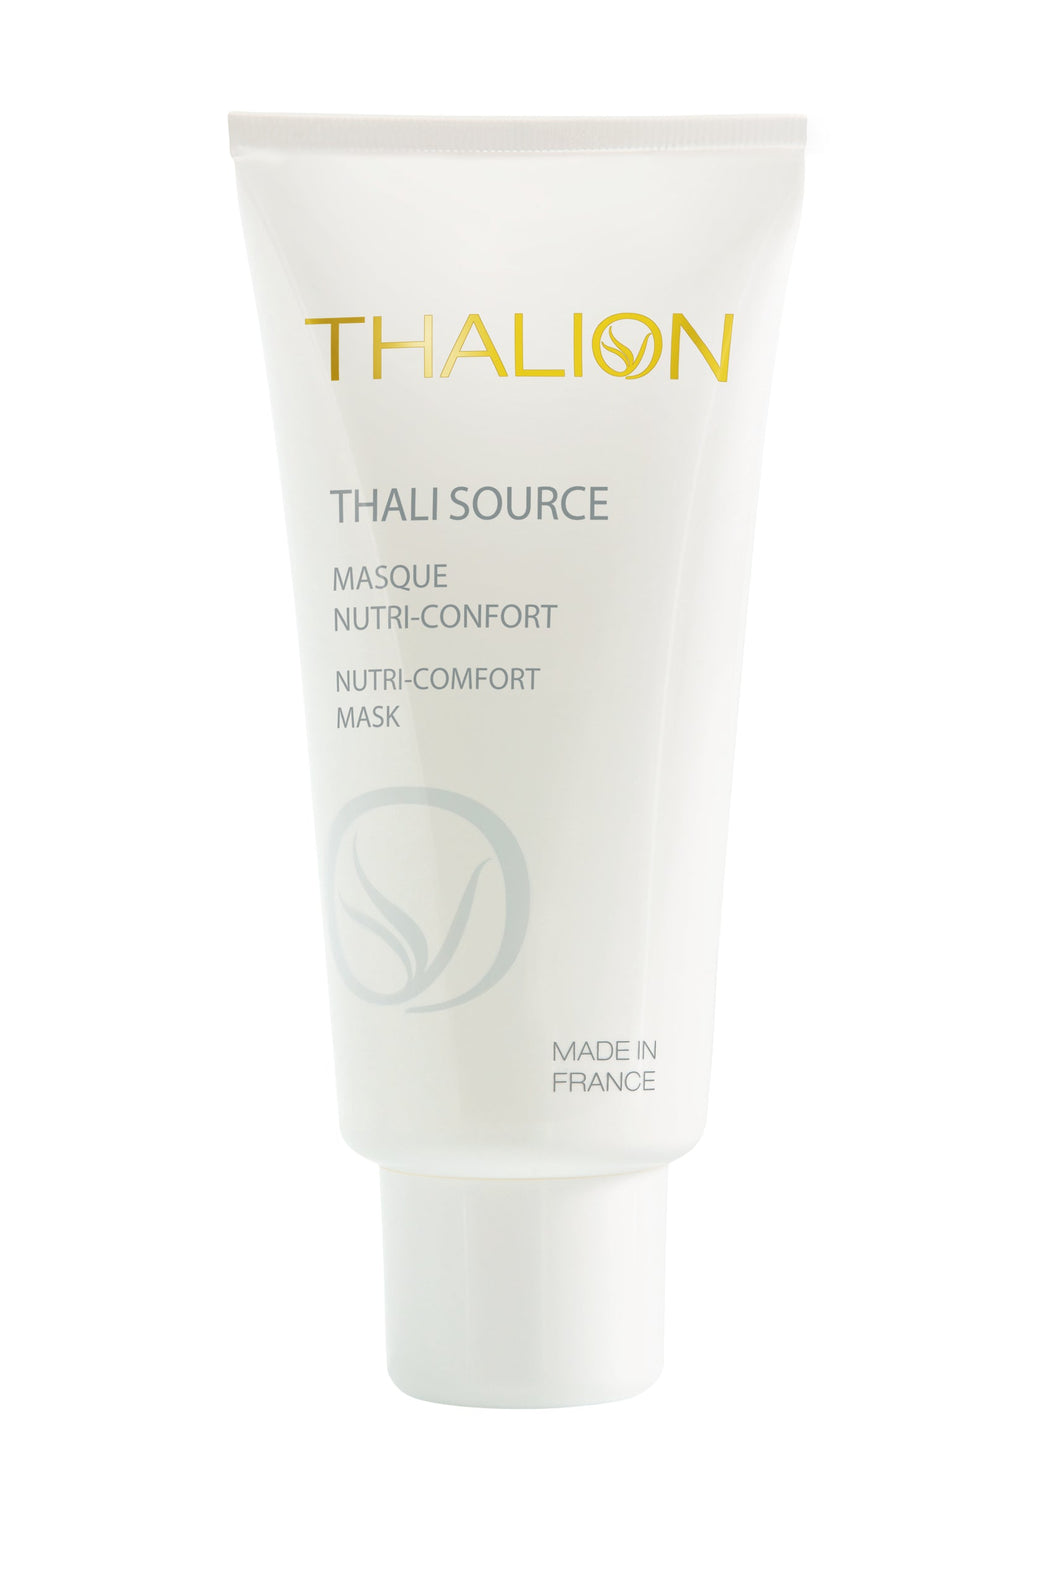 Thali Source Masque Nutri-Confort - Thalion